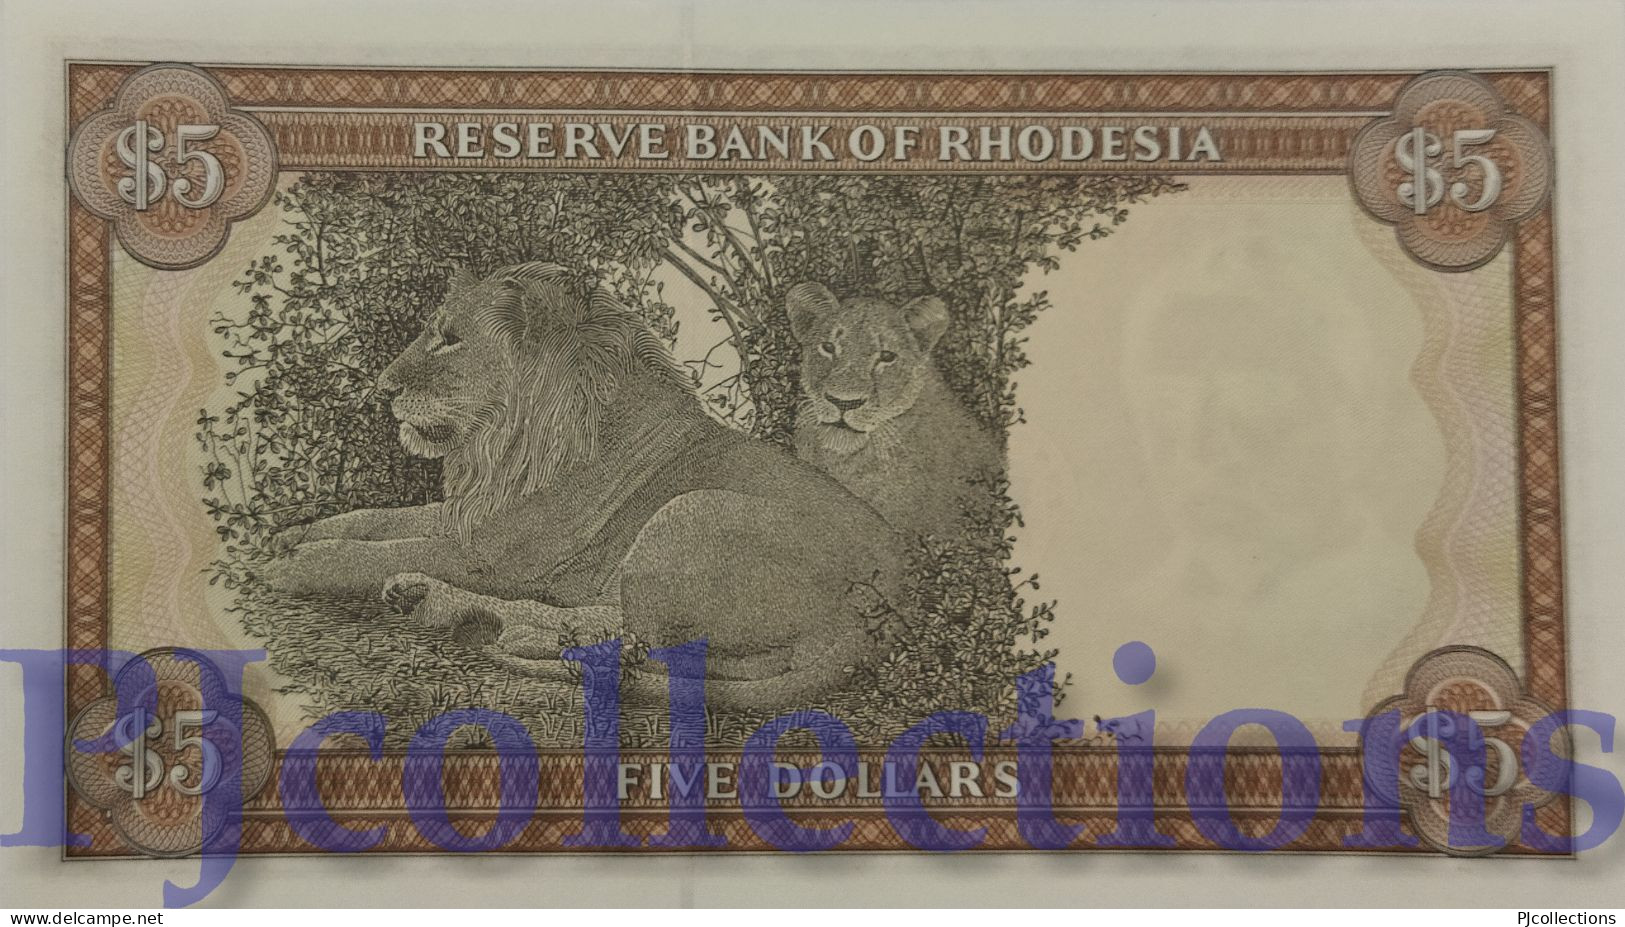 RHODESIA 5 DOLLARS 1978 PICK 36b UNC - Rhodesia